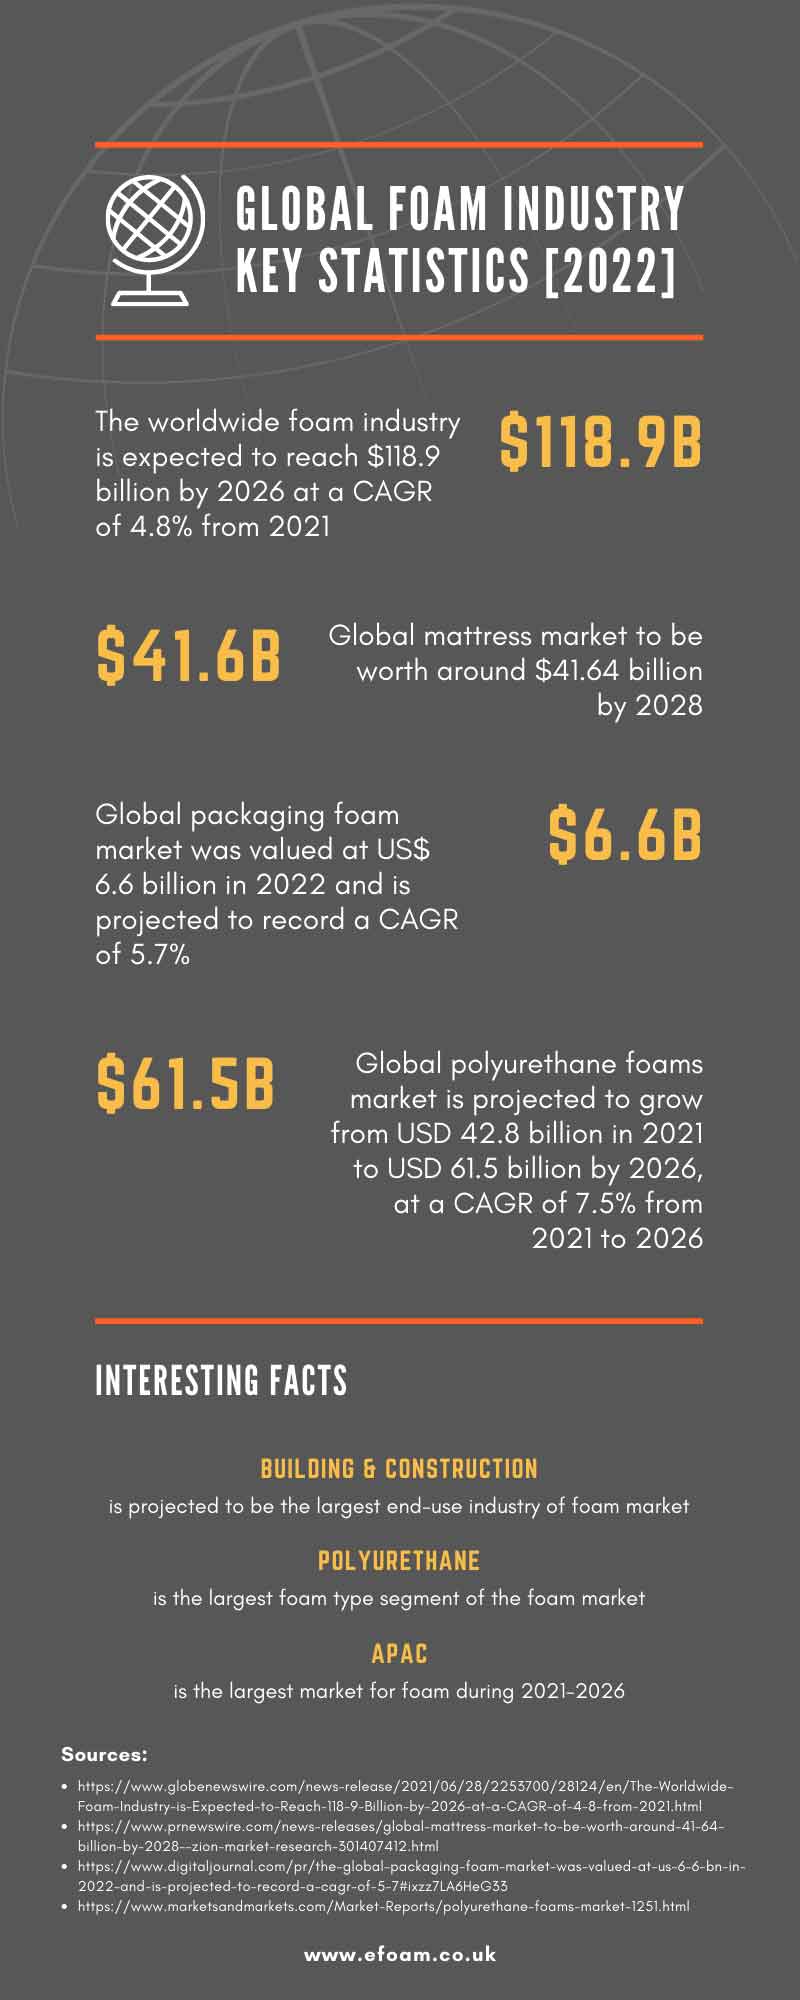 global foam industry key statistics 2022 infographic